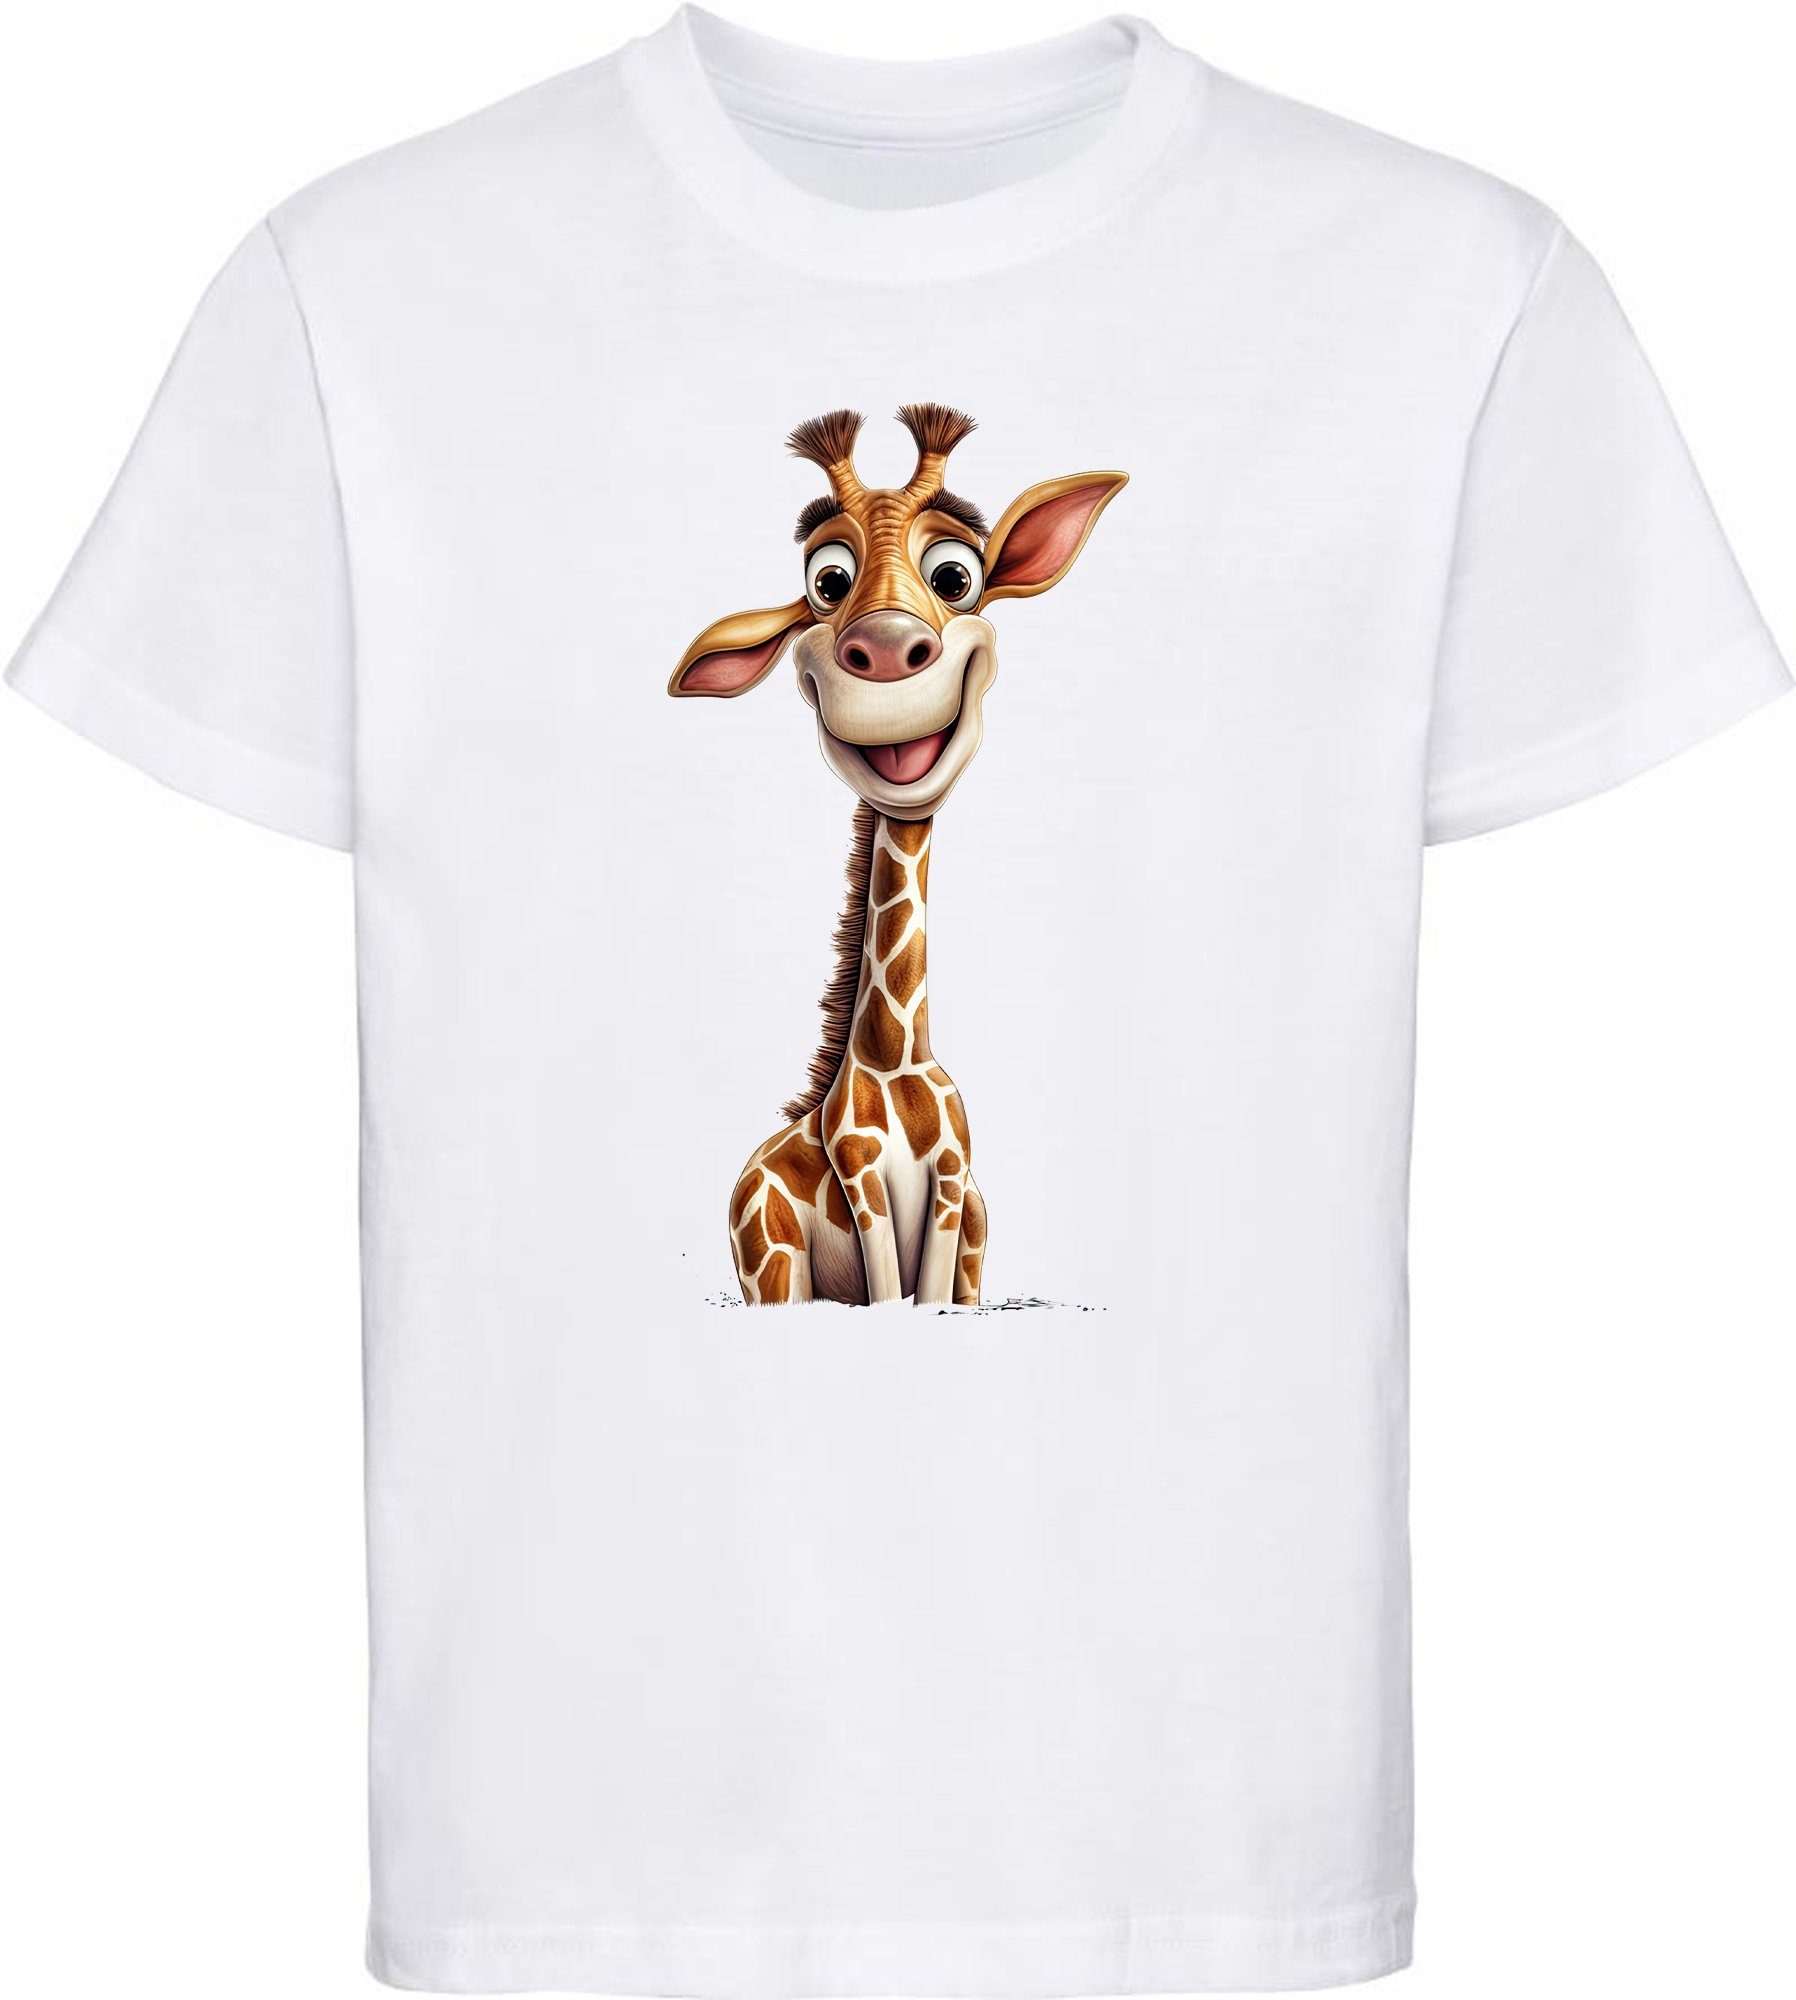 MyDesign24 T-Shirt Kinder Wildtier Print Shirt bedruckt - Baby Giraffe Baumwollshirt mit Aufdruck, i273 weiss